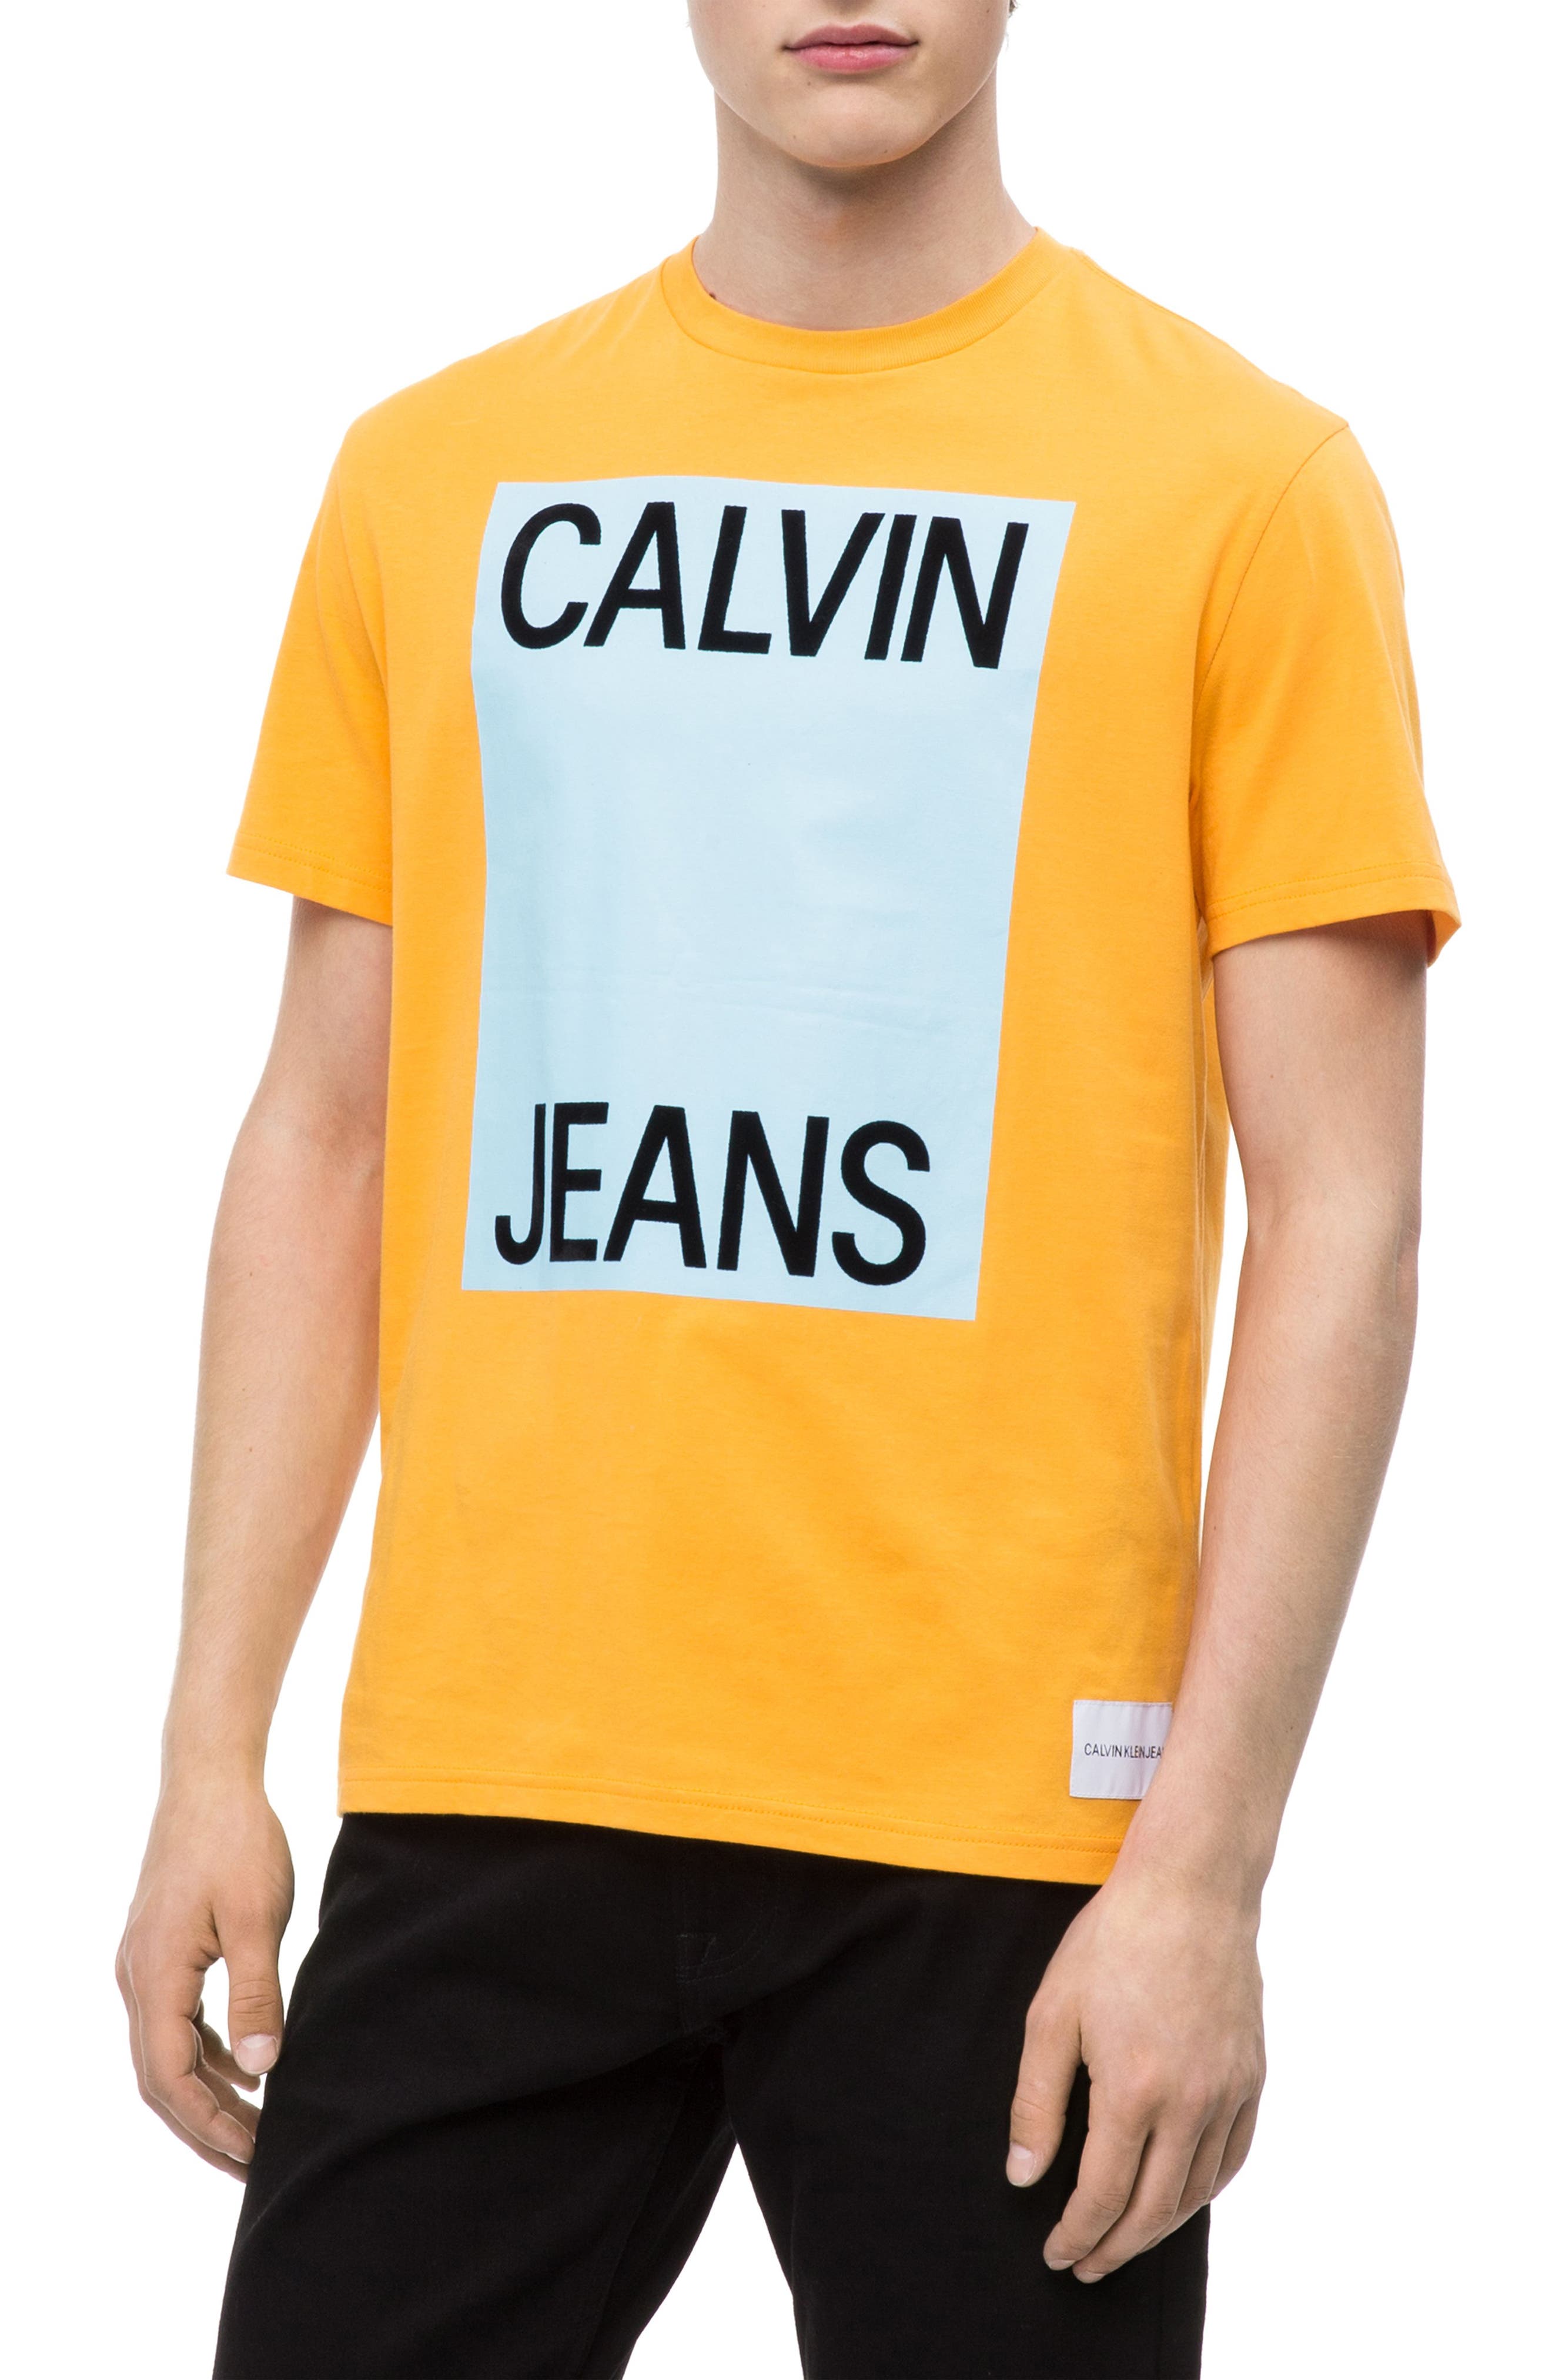 calvin klein jeans yellow shirt